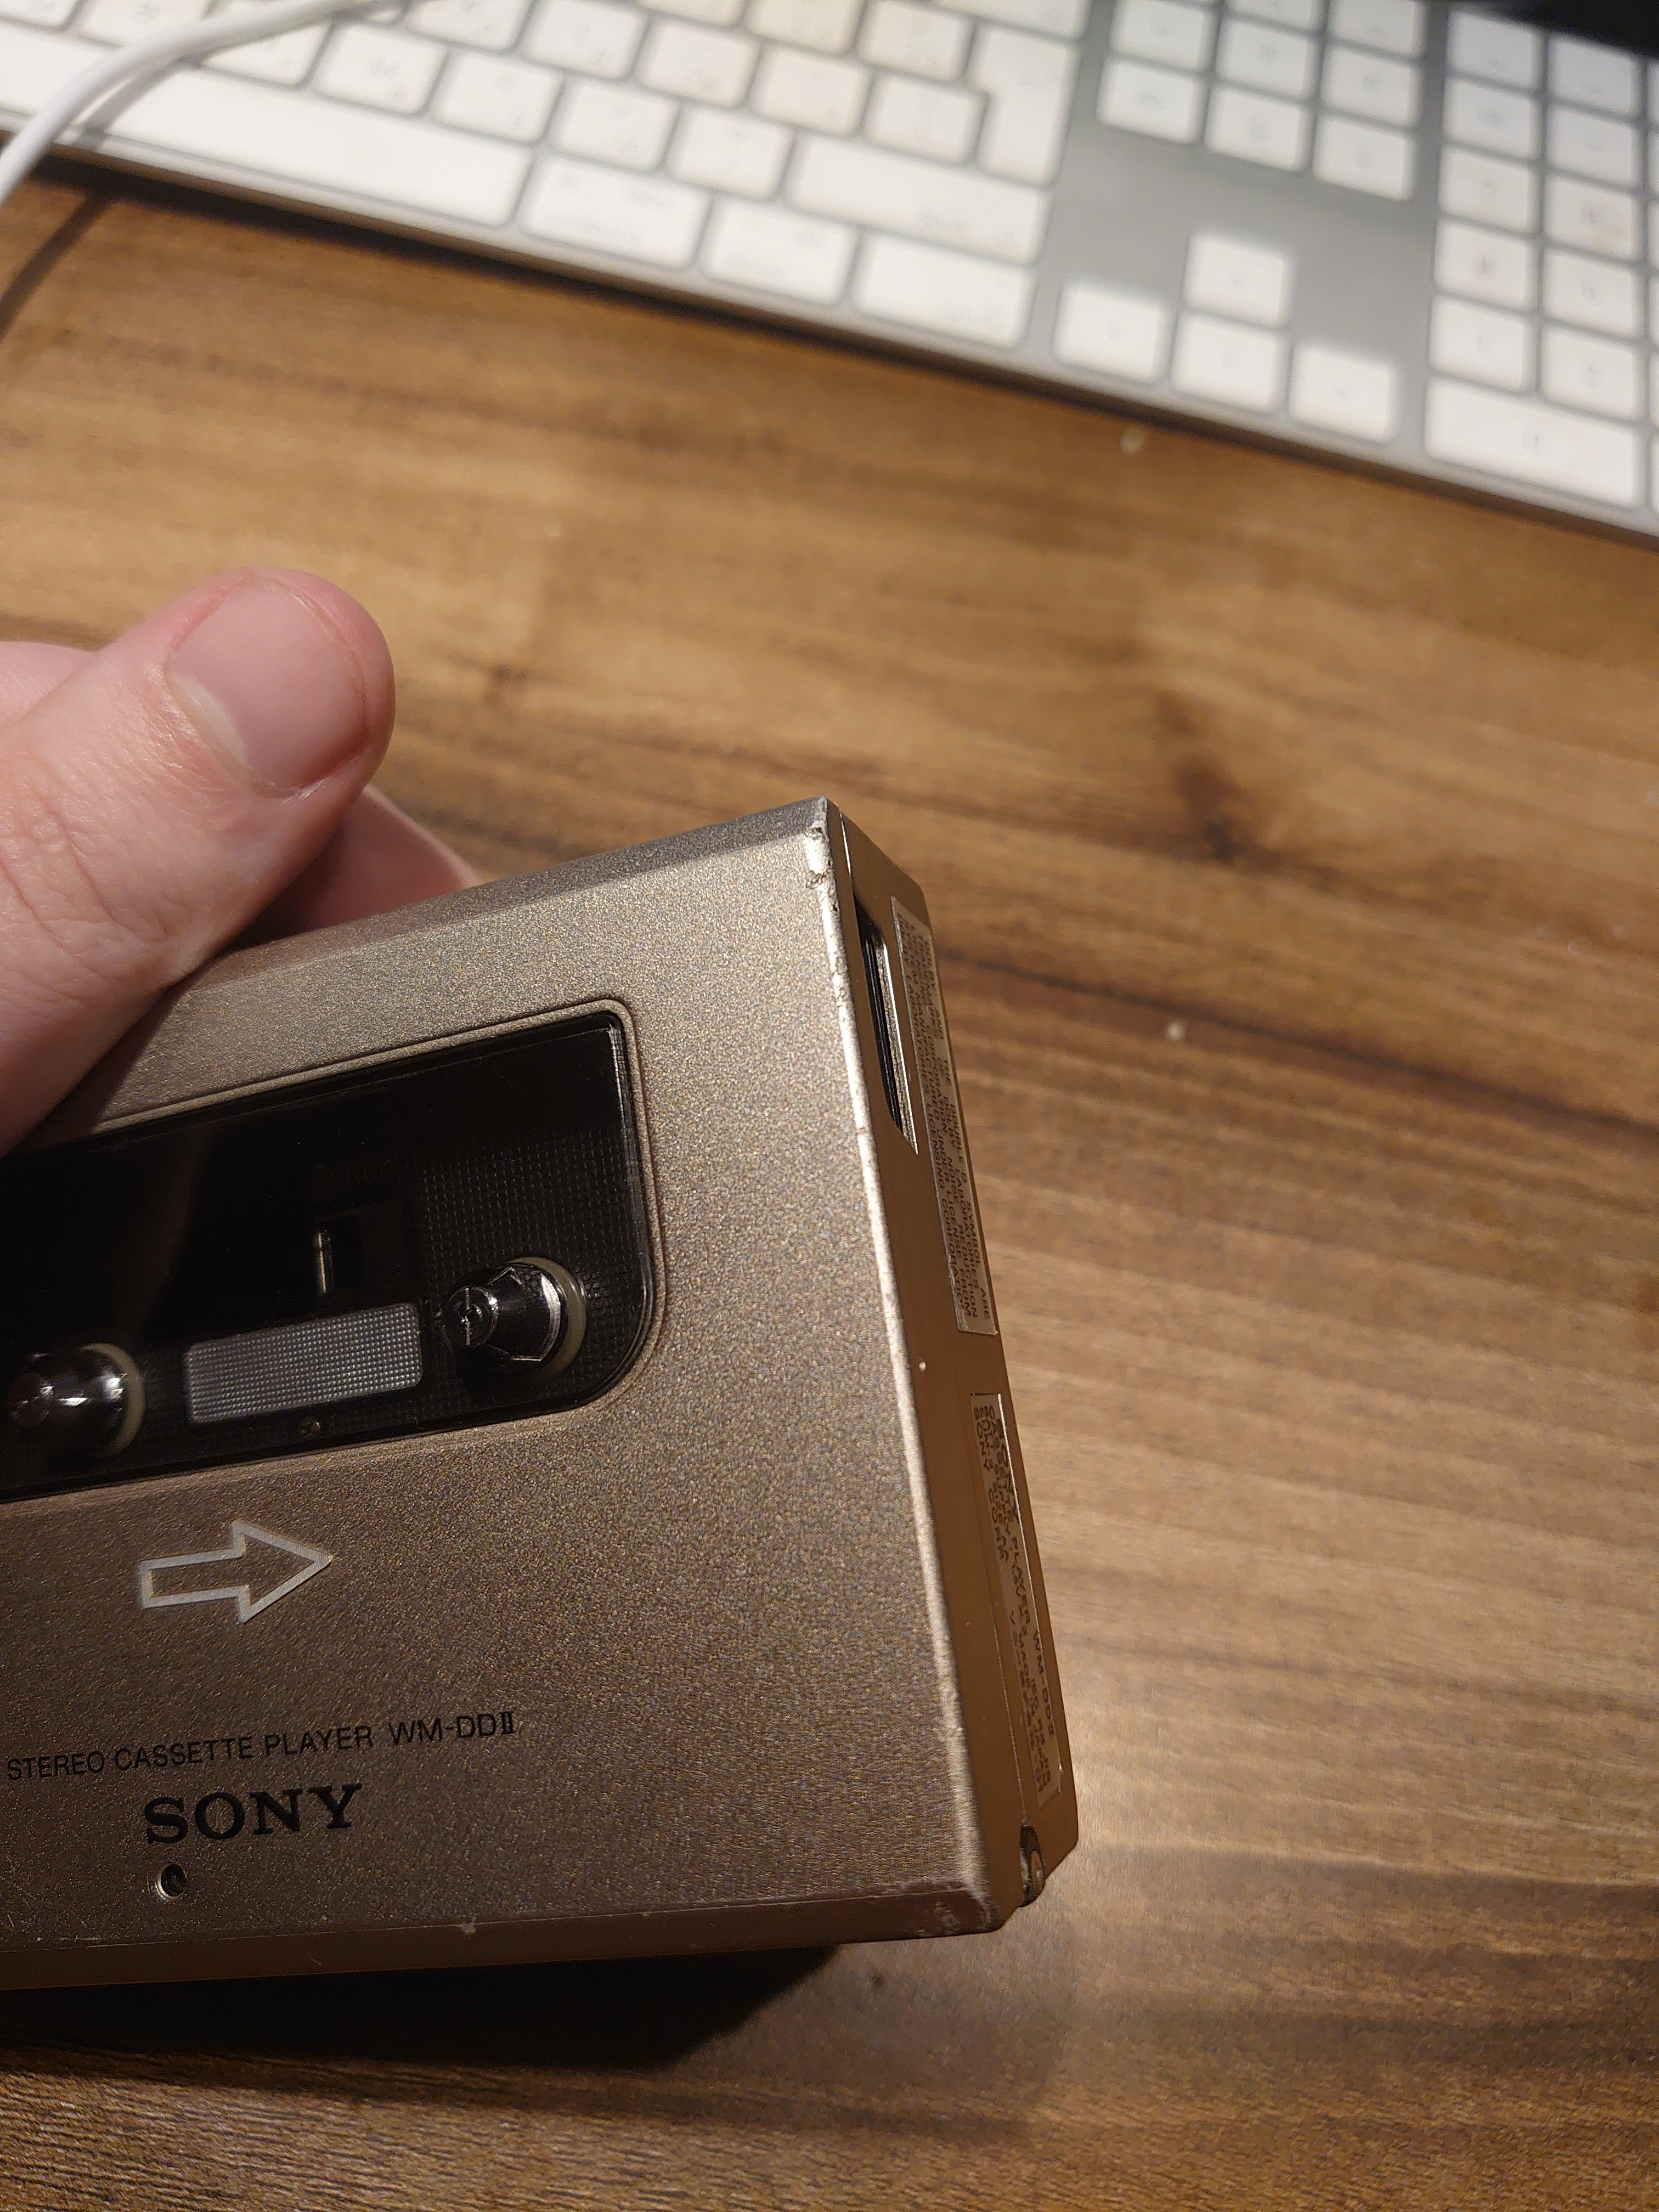 Sony Walkman WM-DD2 Cassette Player Silver Metal Case GOOD WORKING CONDITION